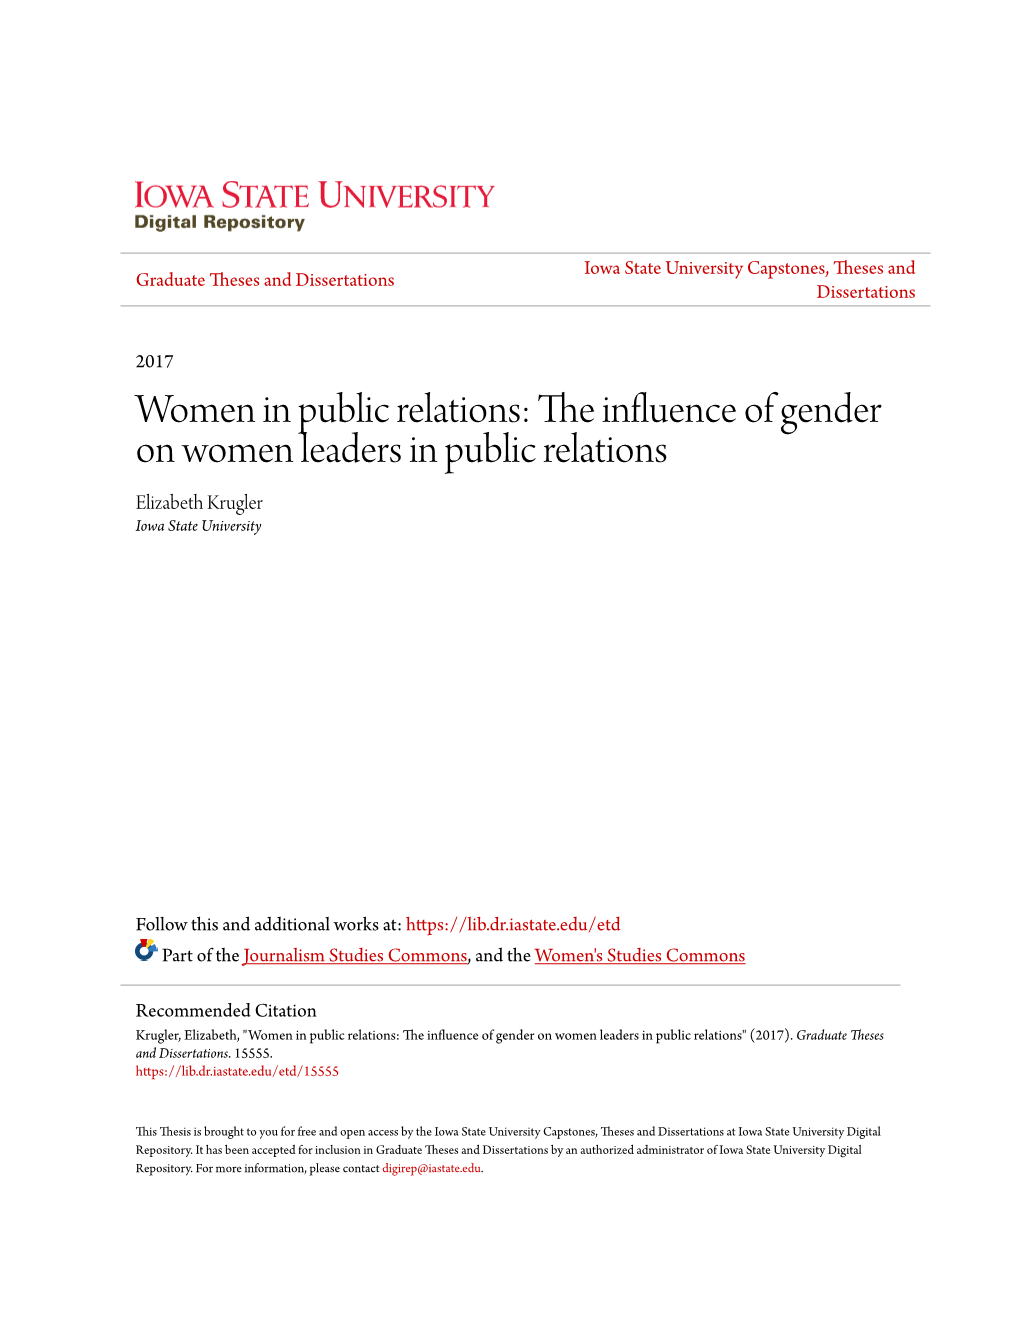 The Influence of Gender on Women Leaders in Public Relations Elizabeth Krugler Iowa State University